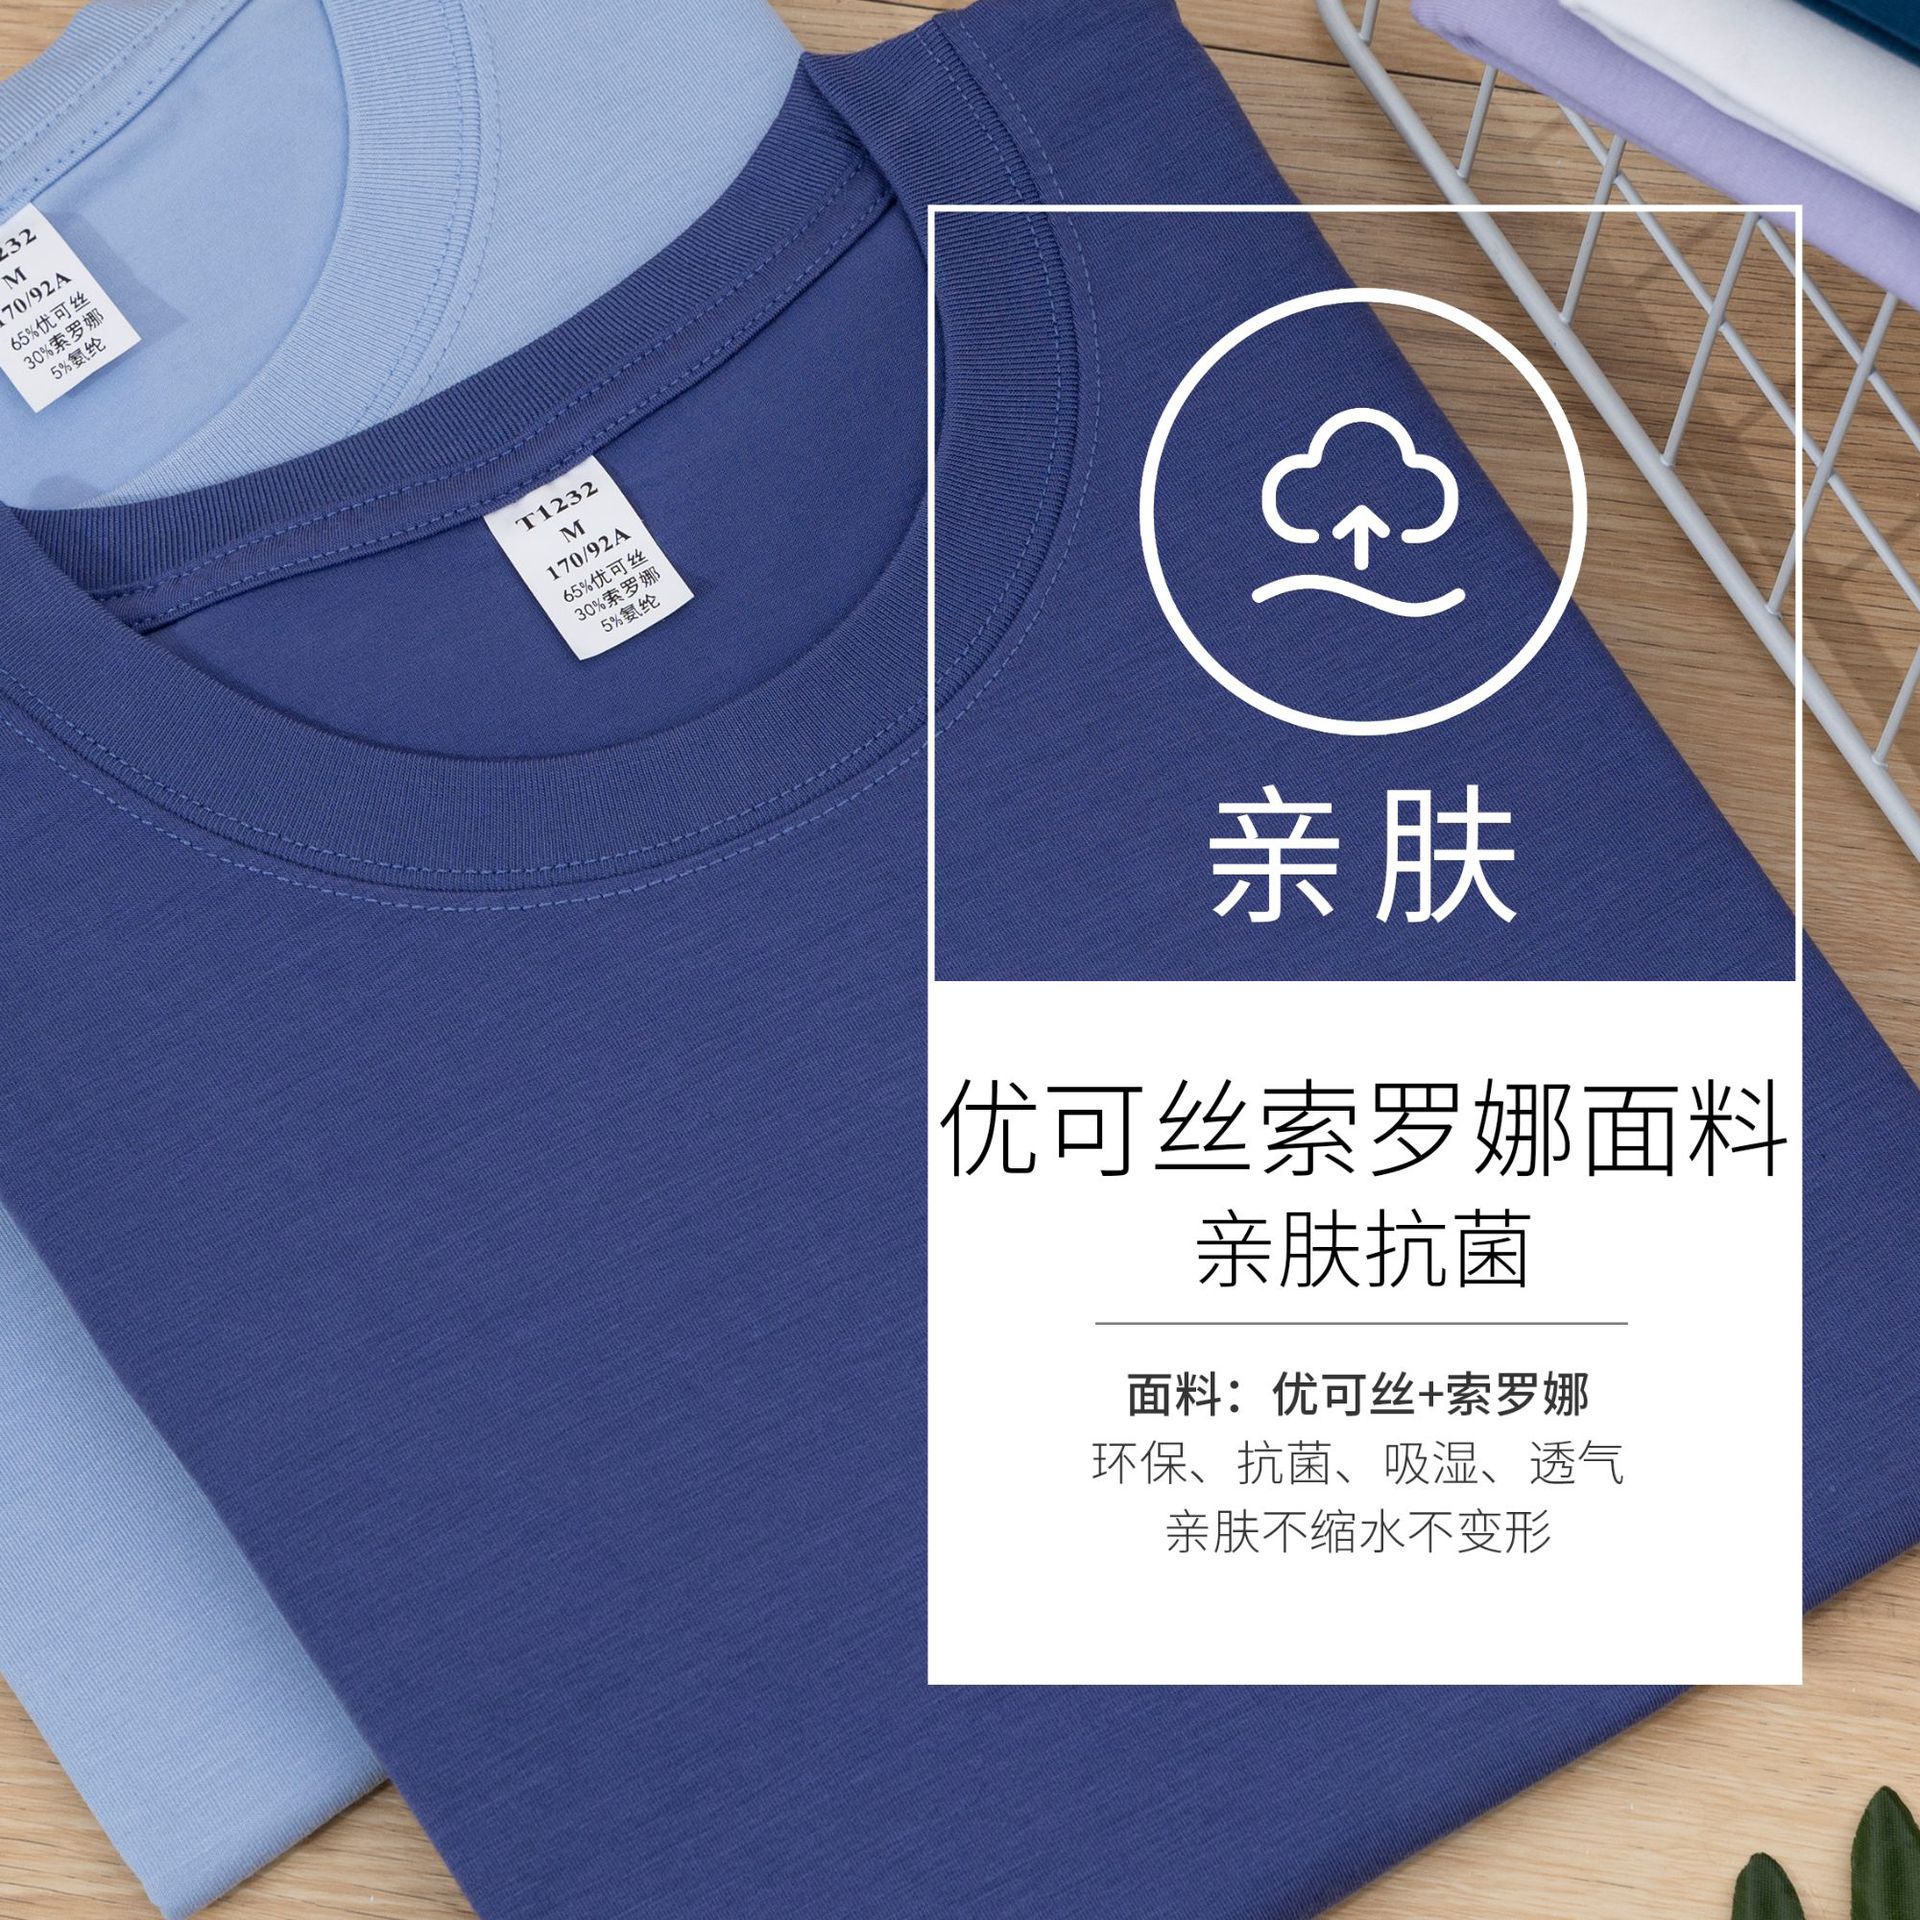 High-End Youke Silk Sorona T-shirt Male Half Sleeve 220G Cool Feeling Modal T-shirt Women's round Neck Short Sleeve Men's T-shirt